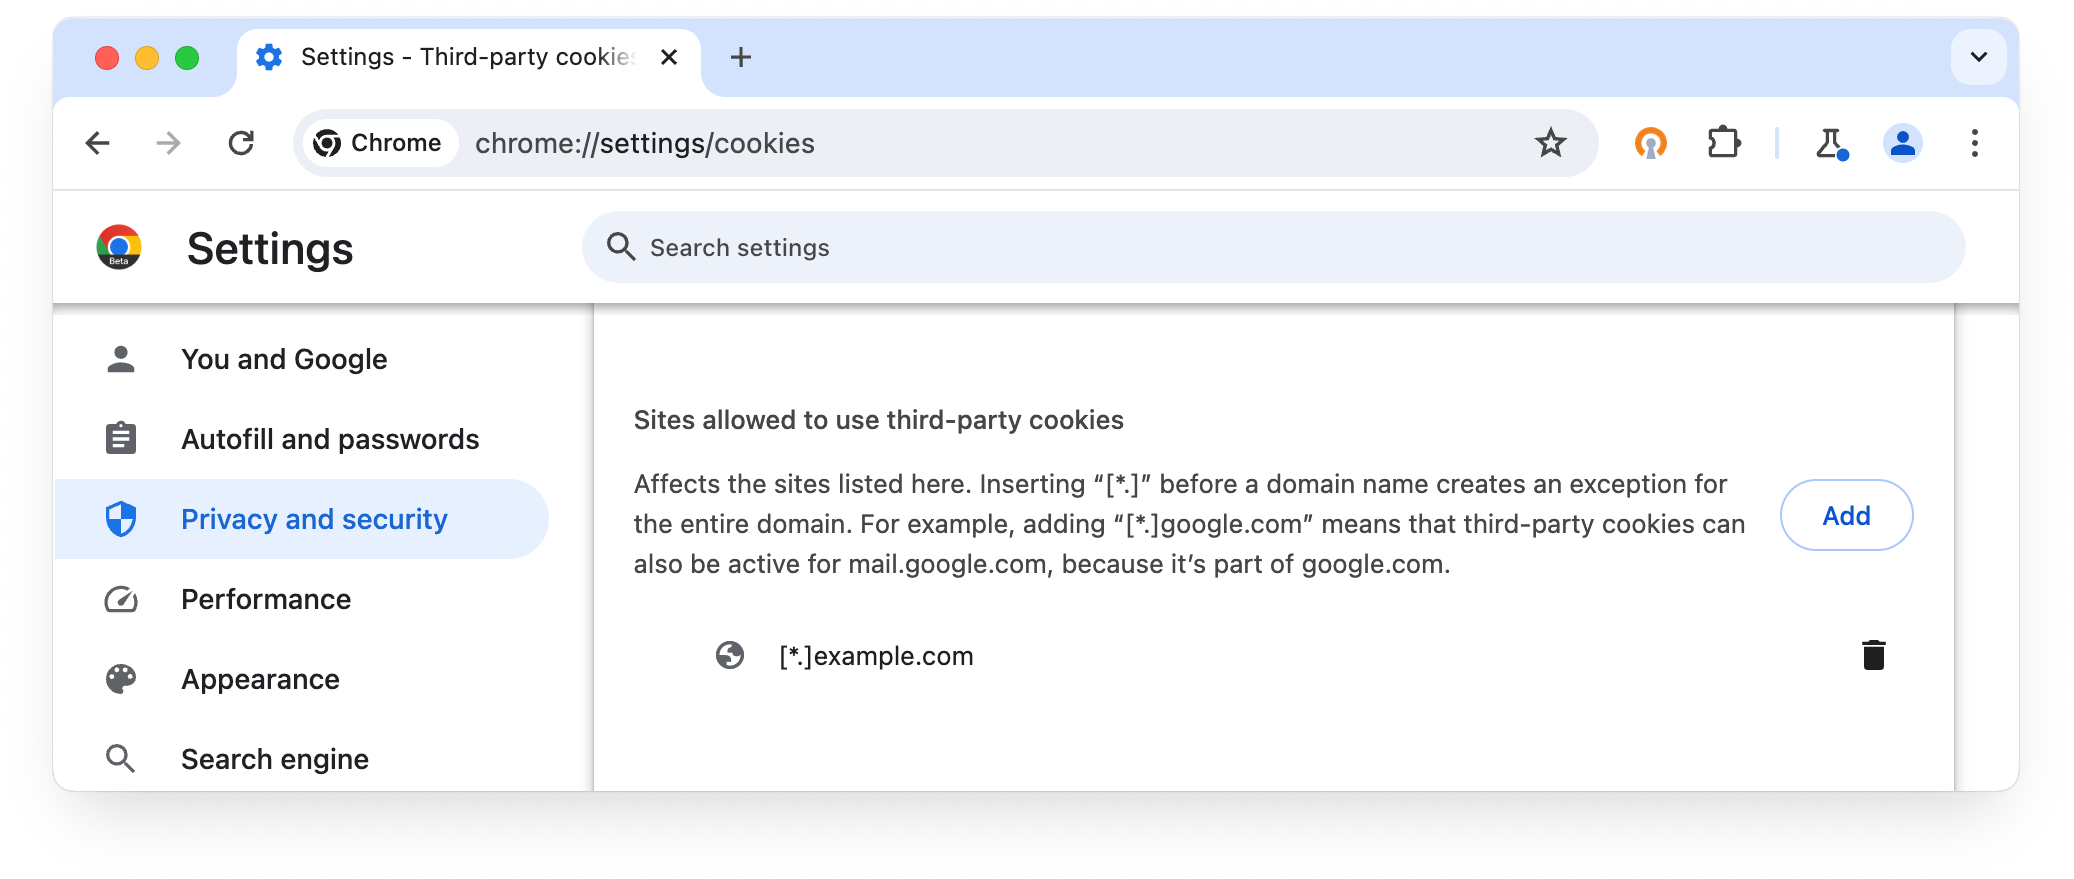 chrome://settings/cookies：允許使用第三方 Cookie 的網站